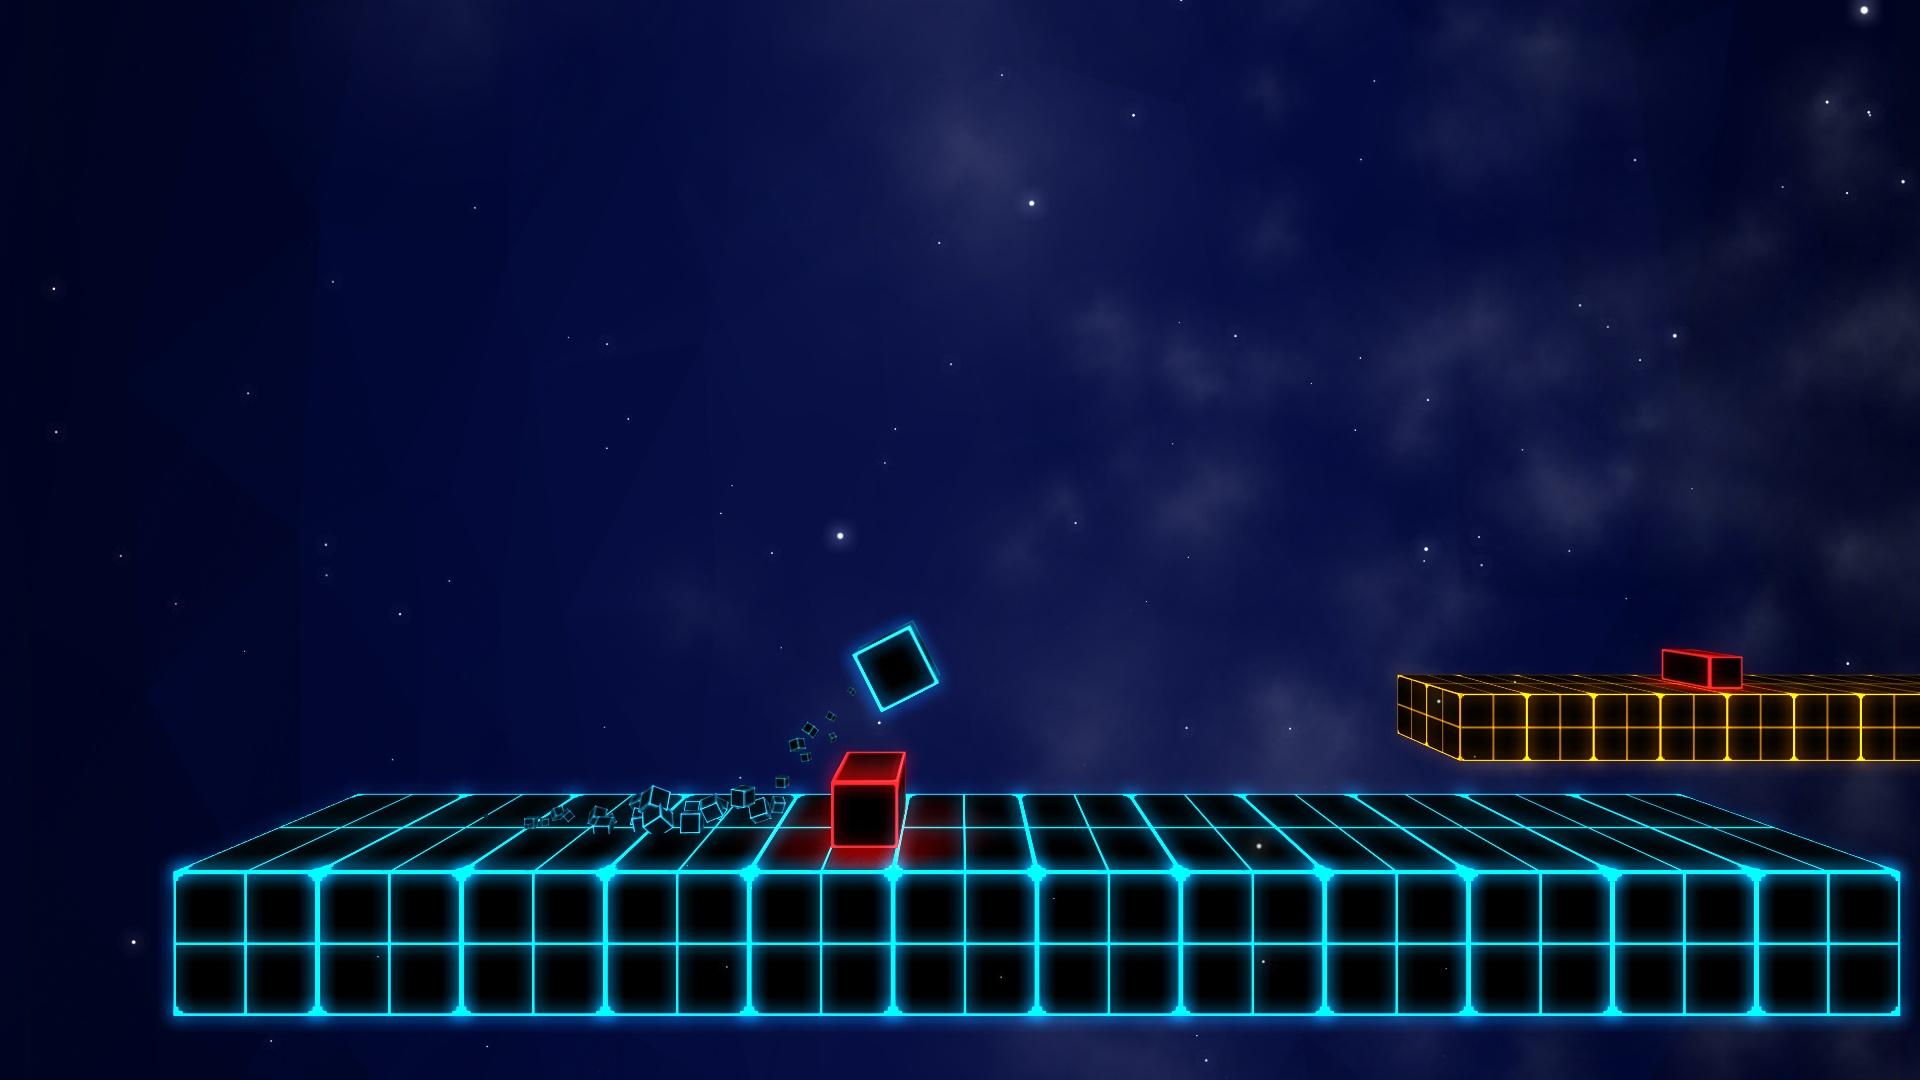 Screenshot №4 from game Cube Runner